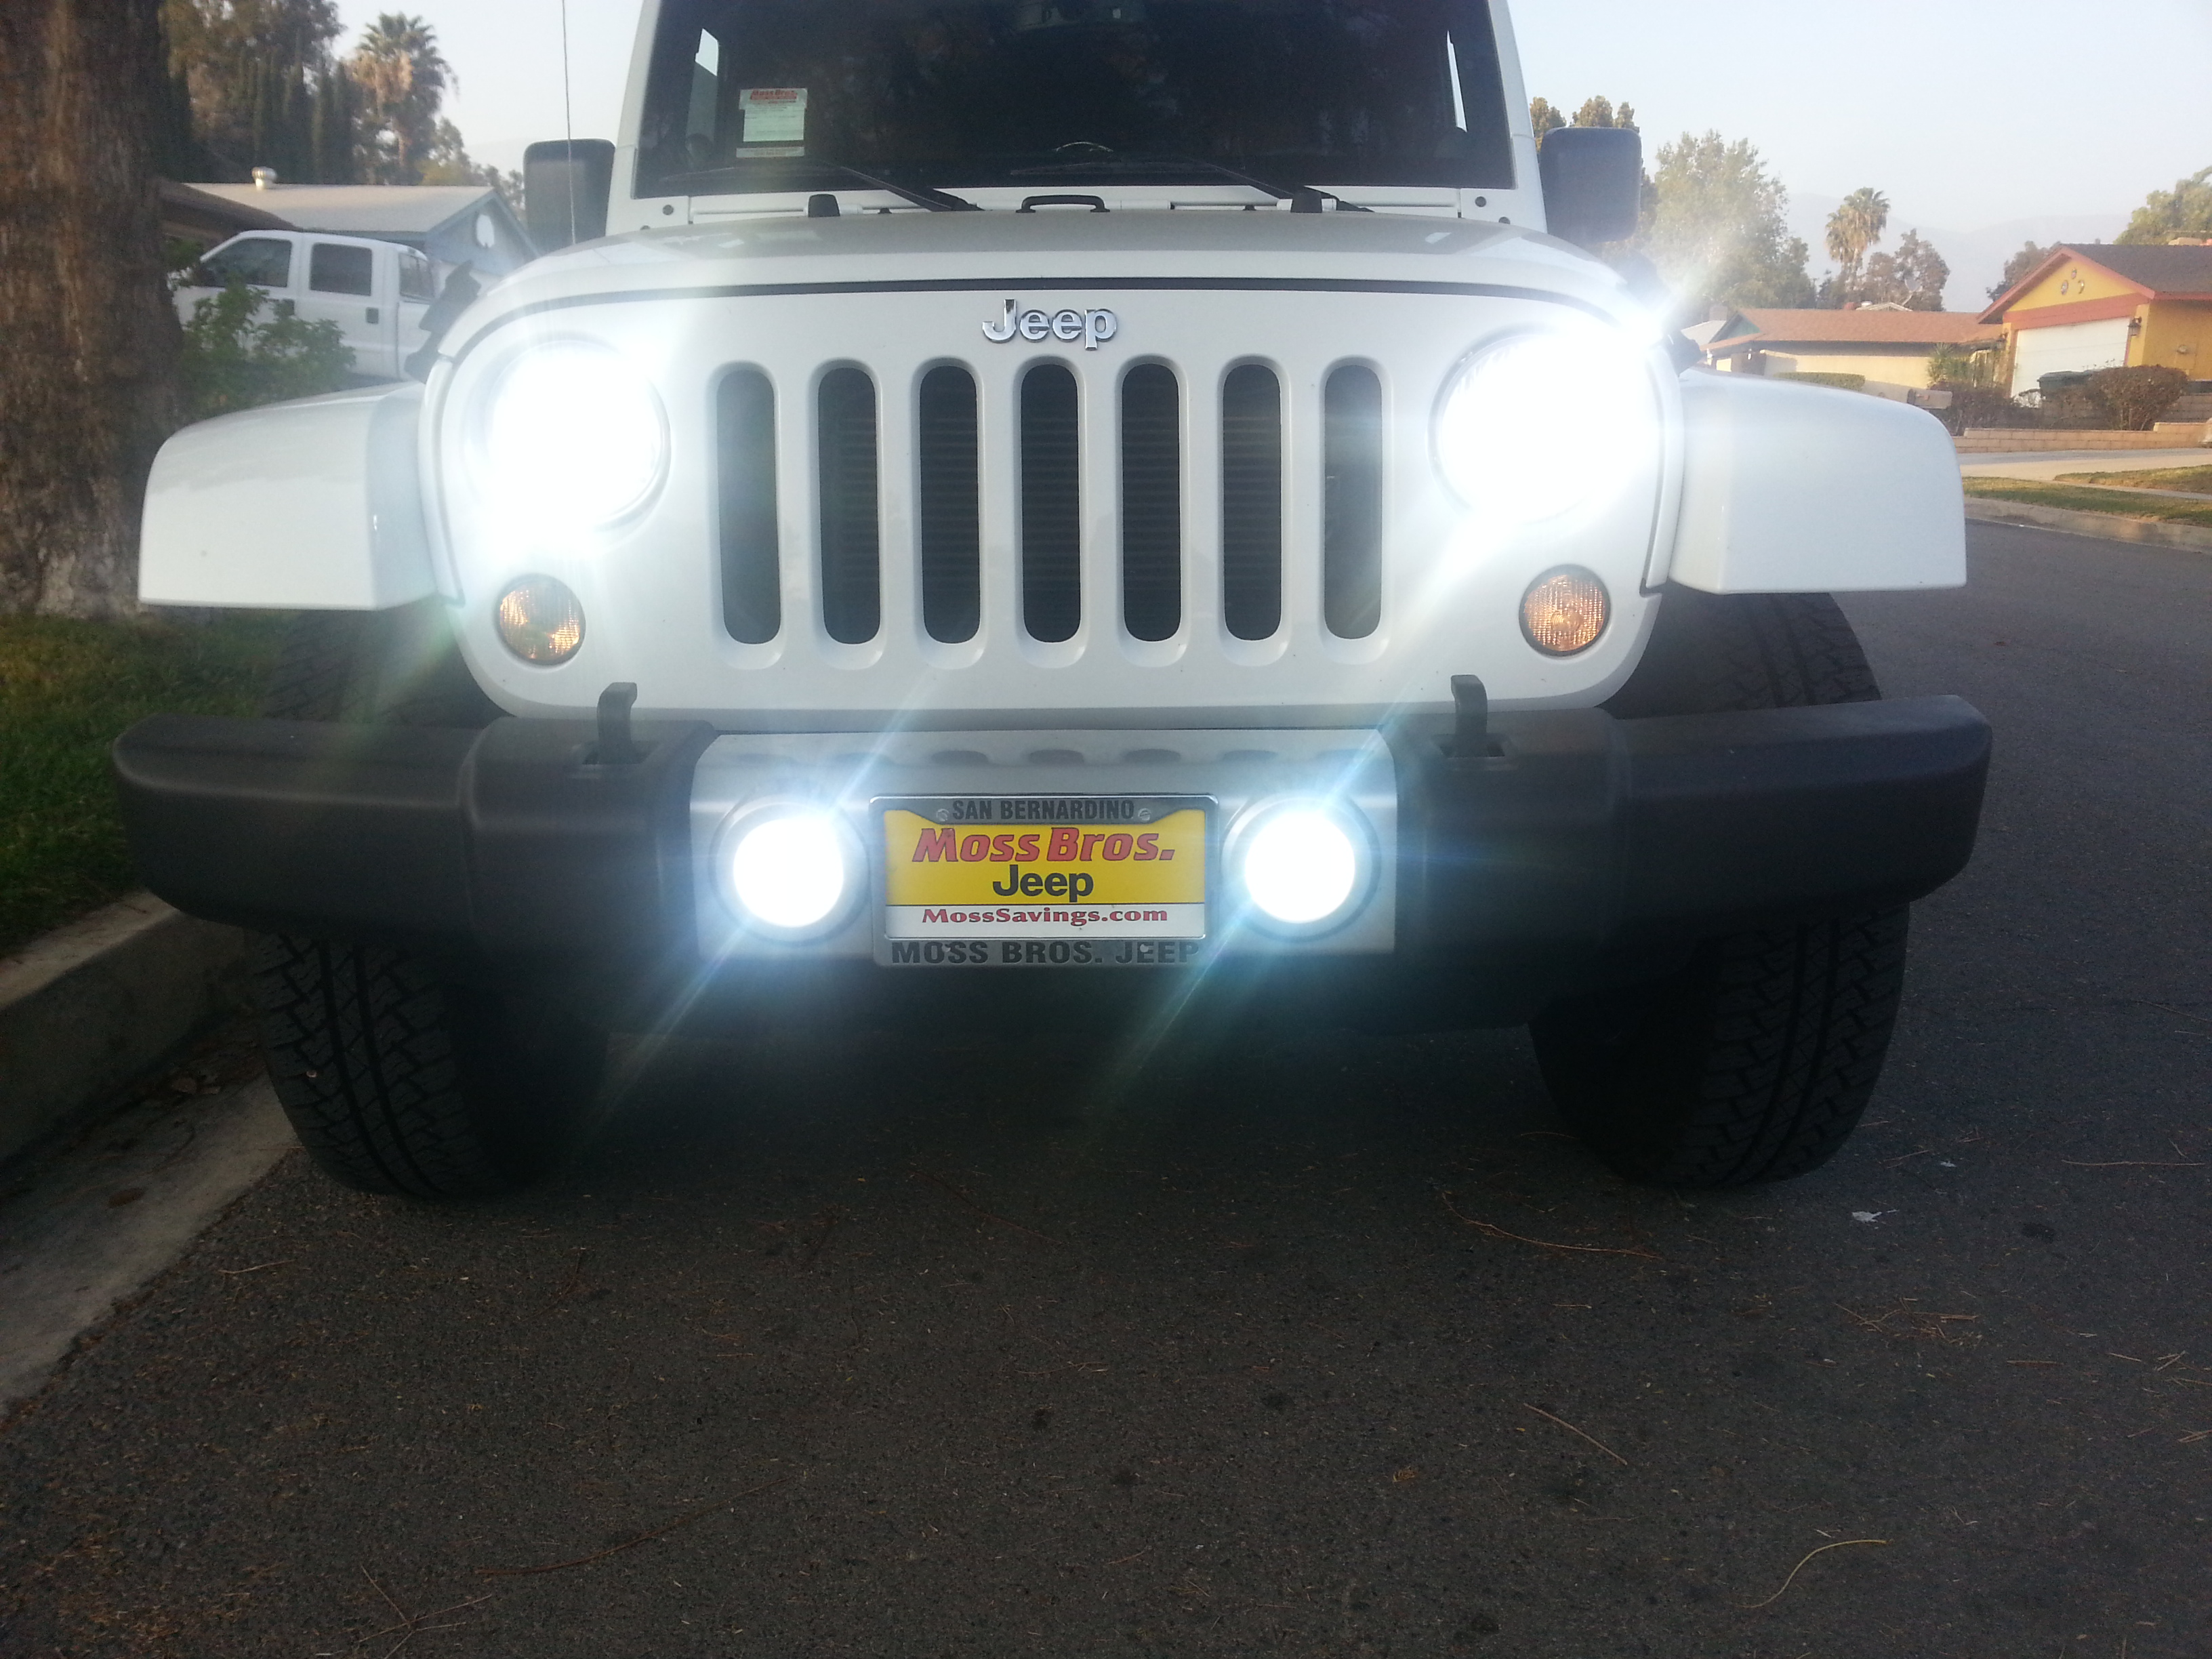 Jeep wrangler hid conversion headlights #2